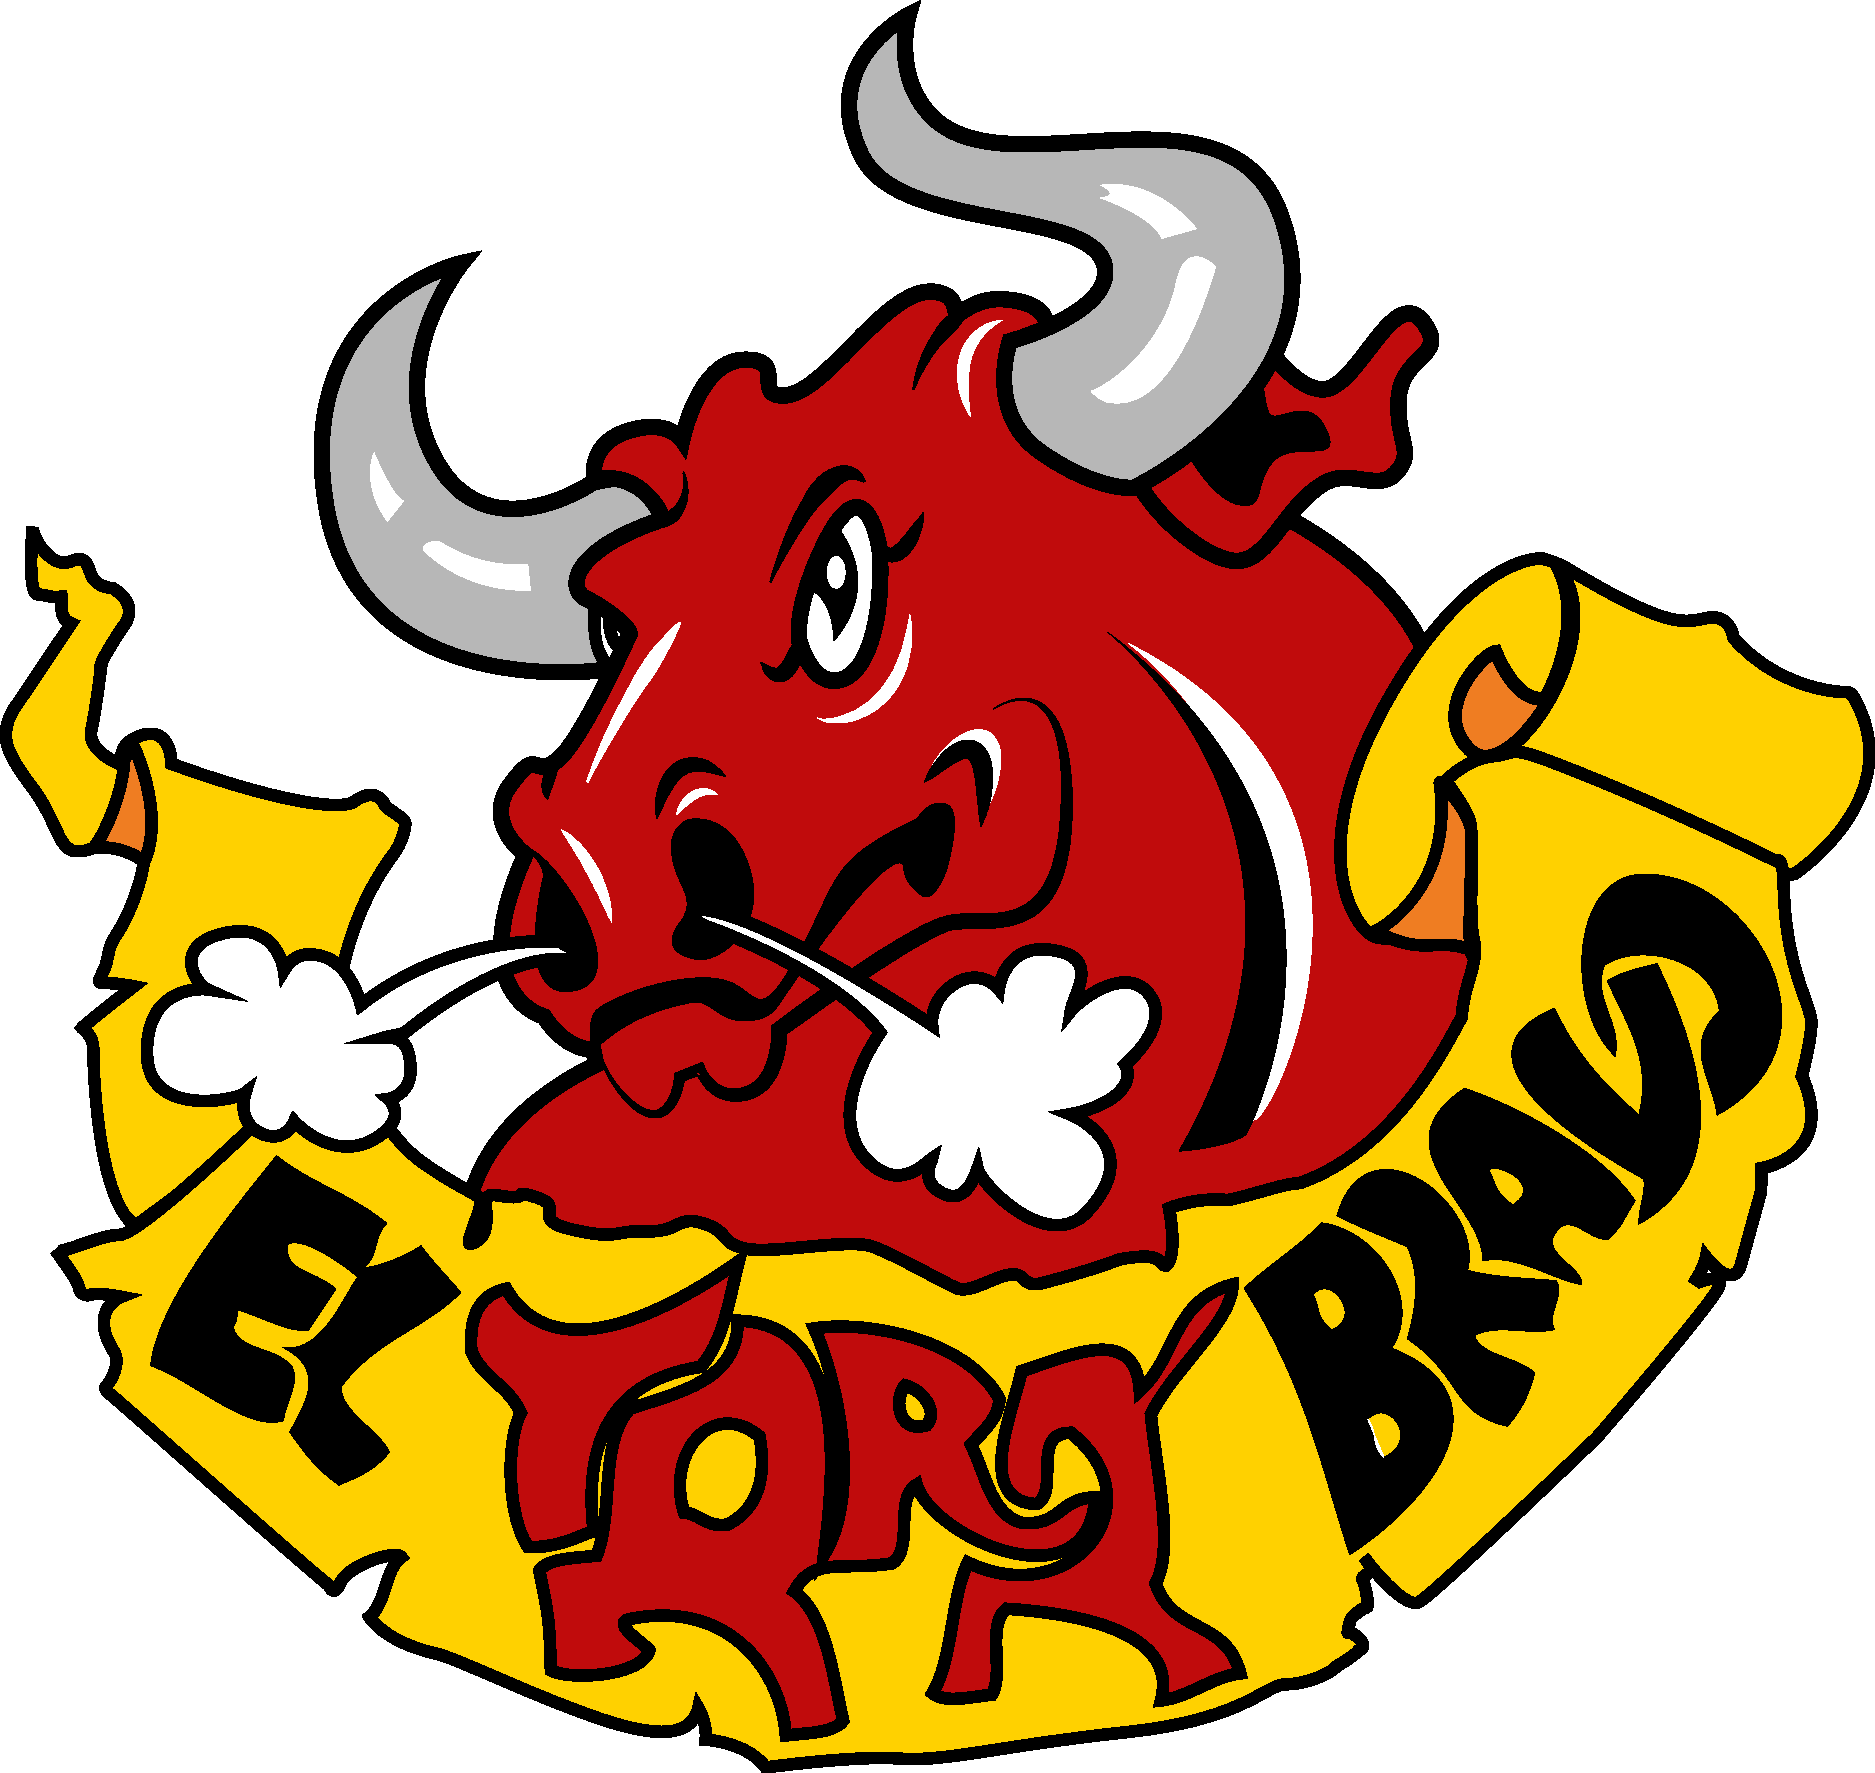 El Toro Bravo Logo Vector